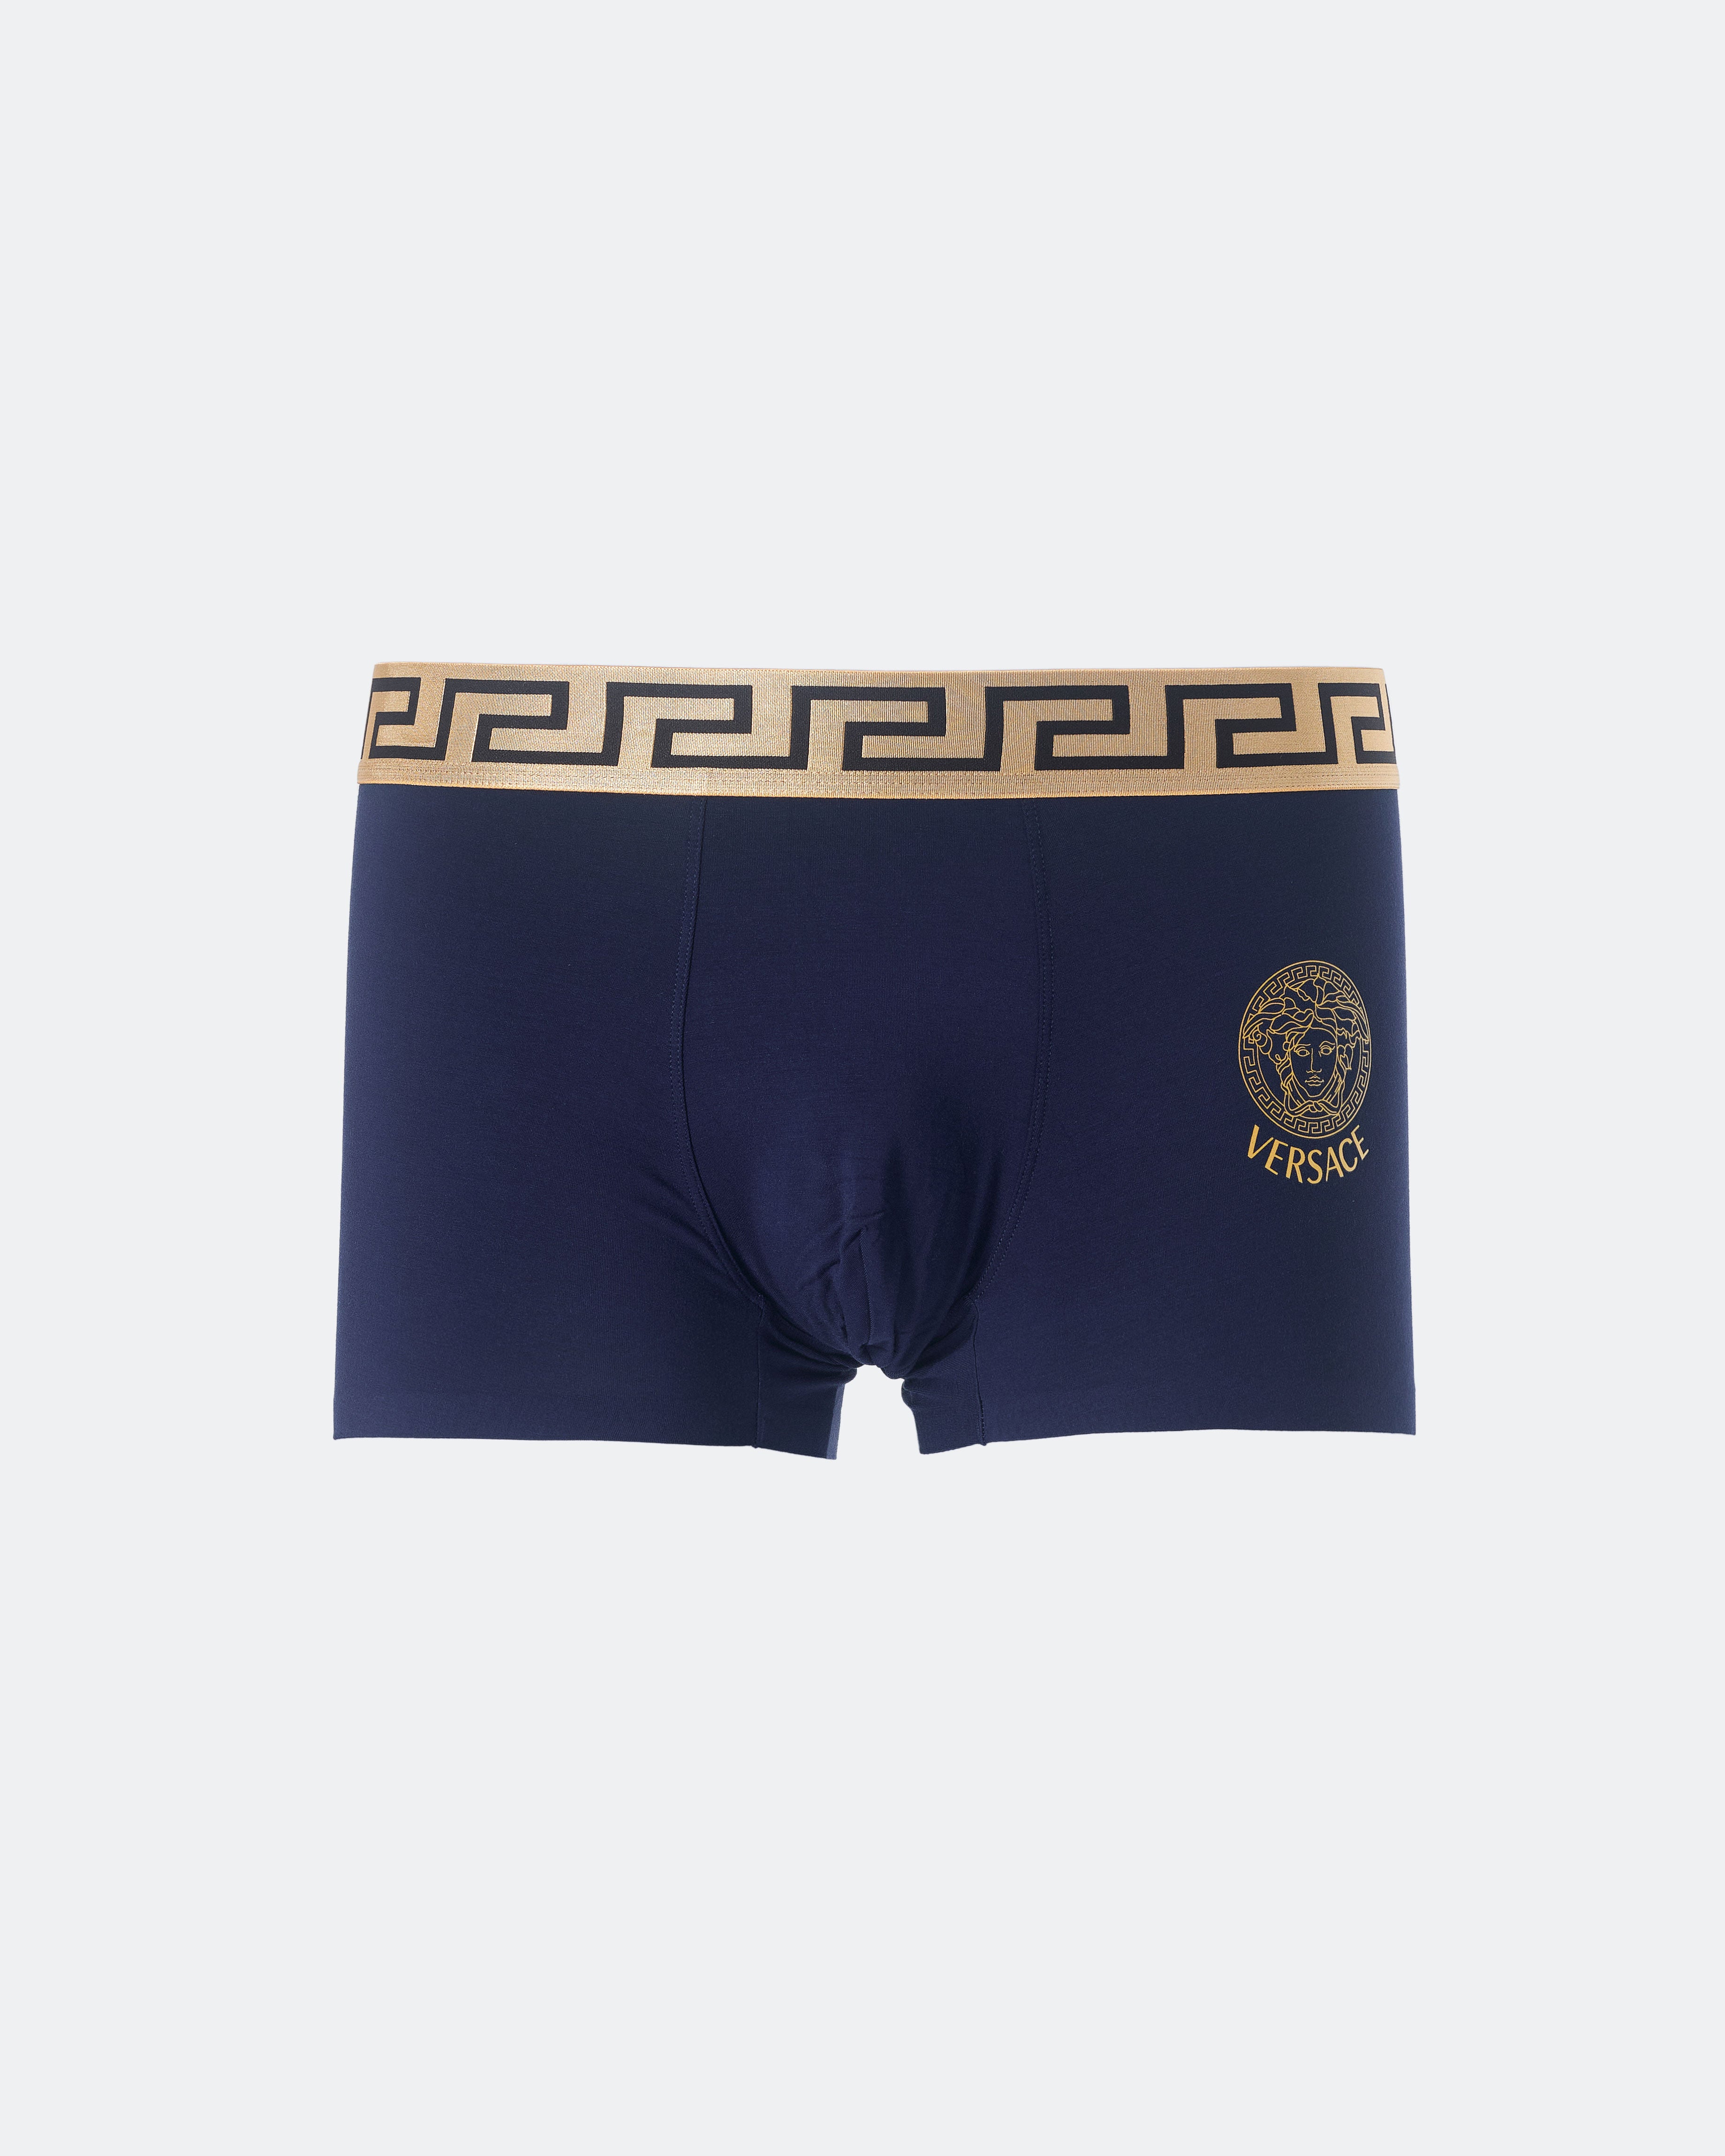 VER Medusda Logo Printed Men Blue Underwear 6.90